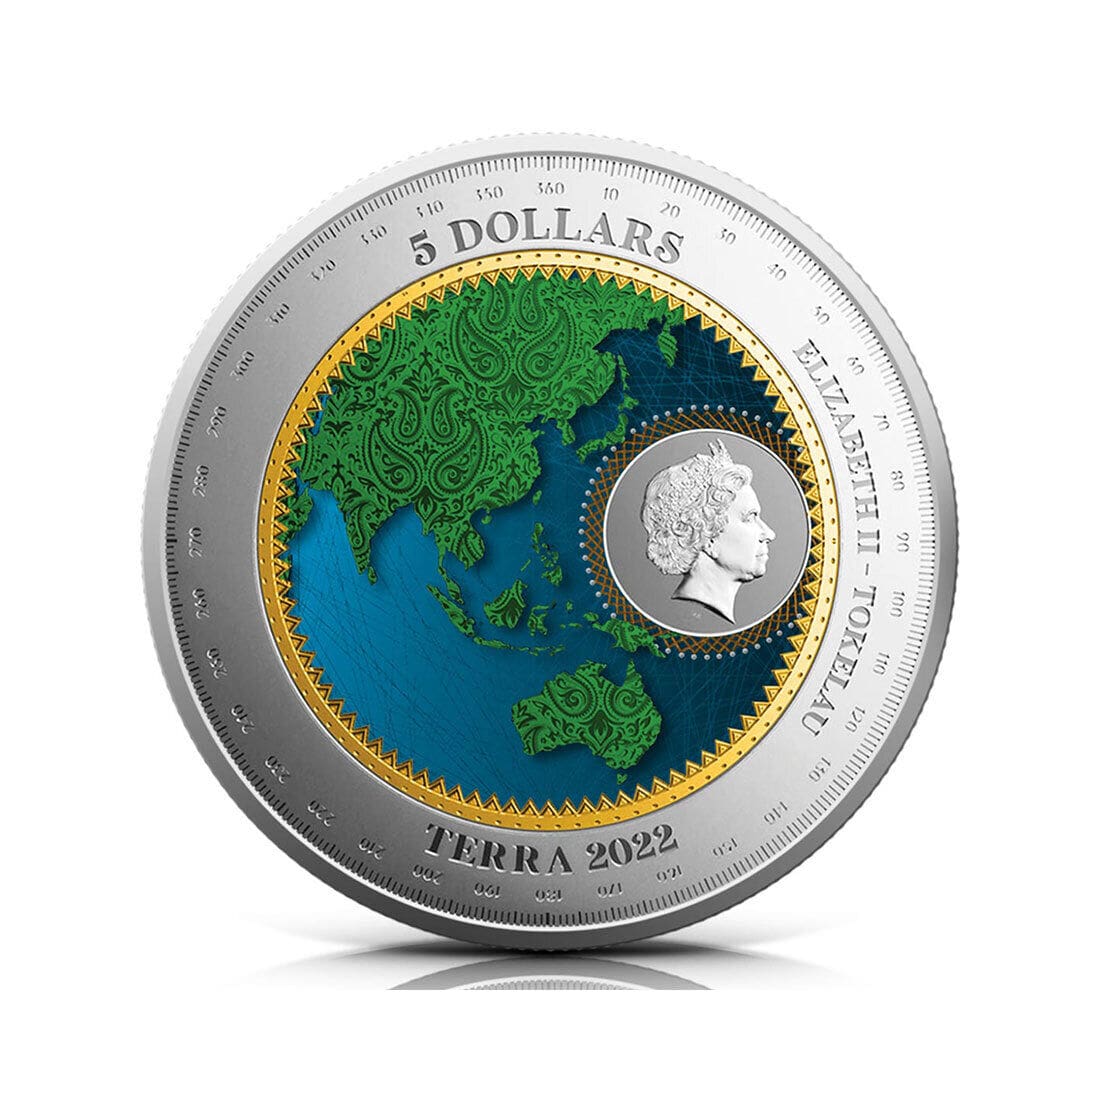 2022 $5 Terra 1oz Silver Colourised Coin - Obverse View